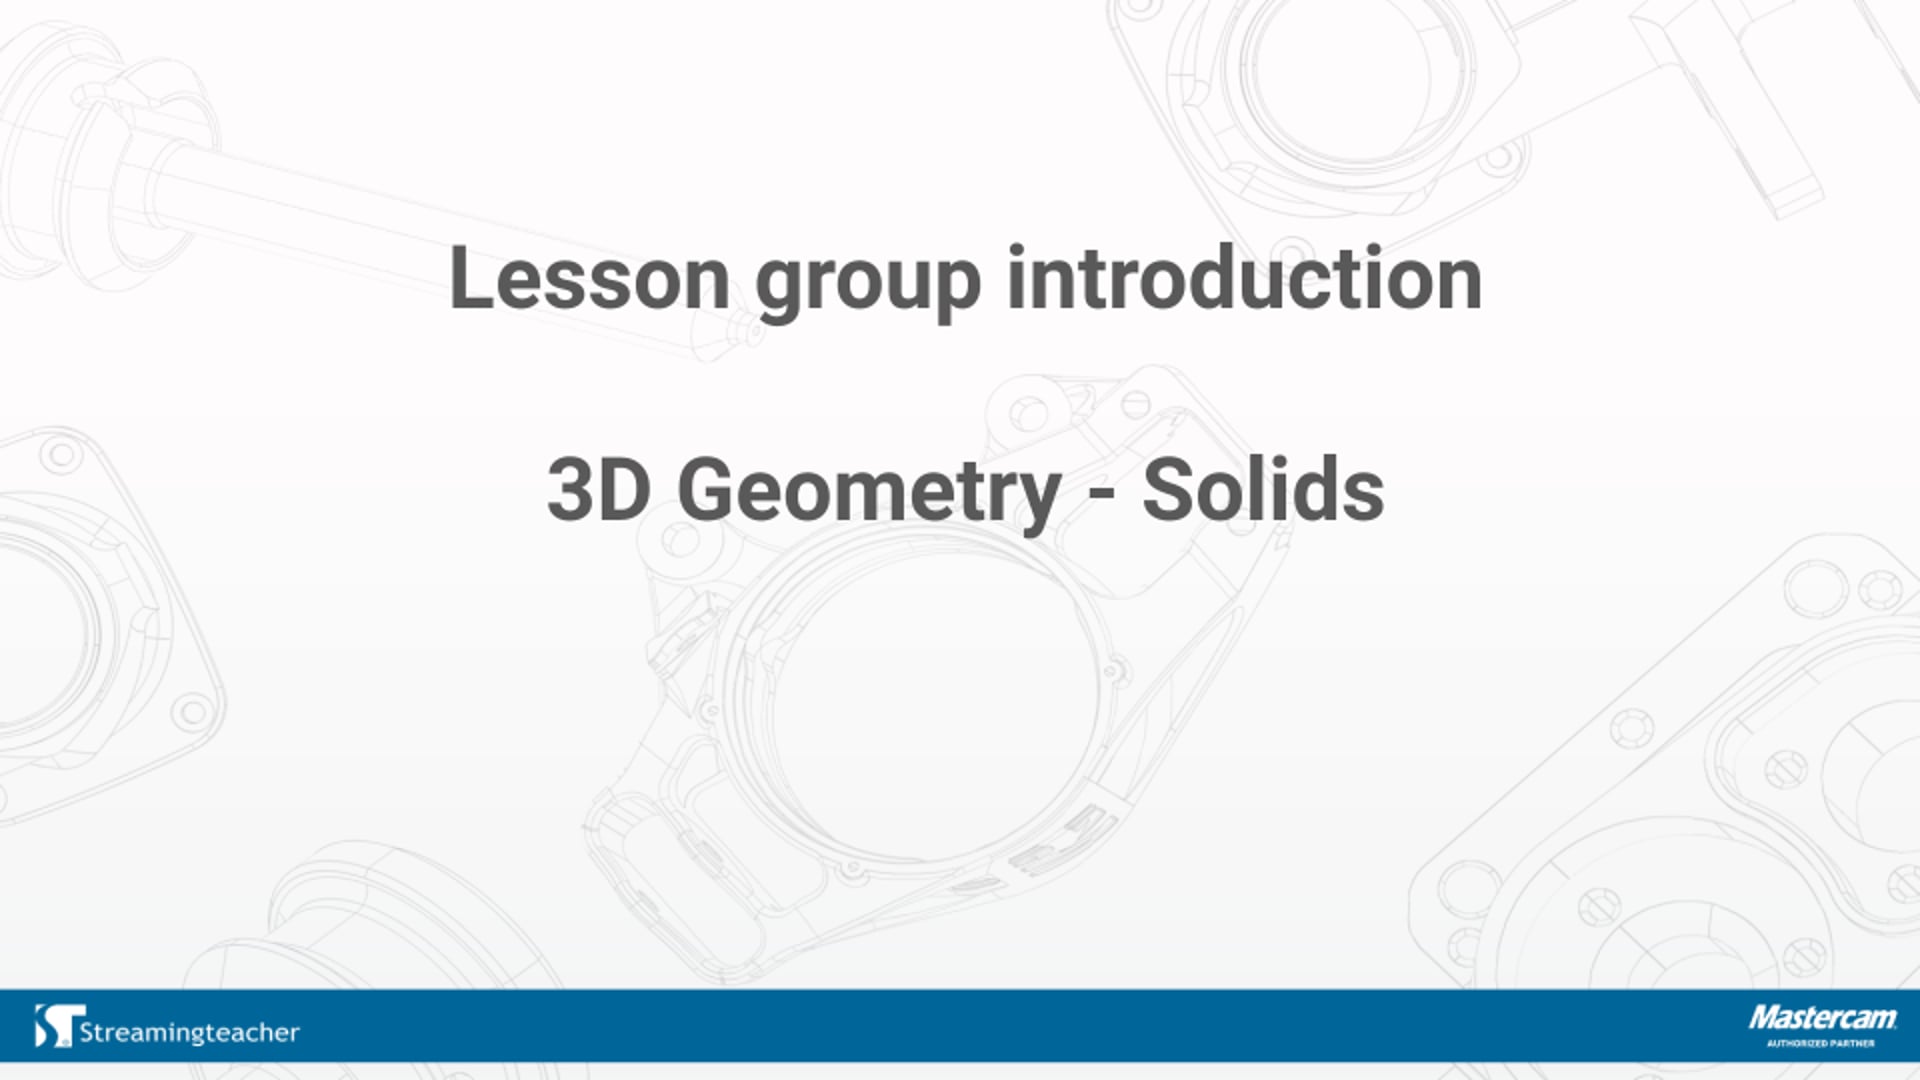 3D Geometry - Solids